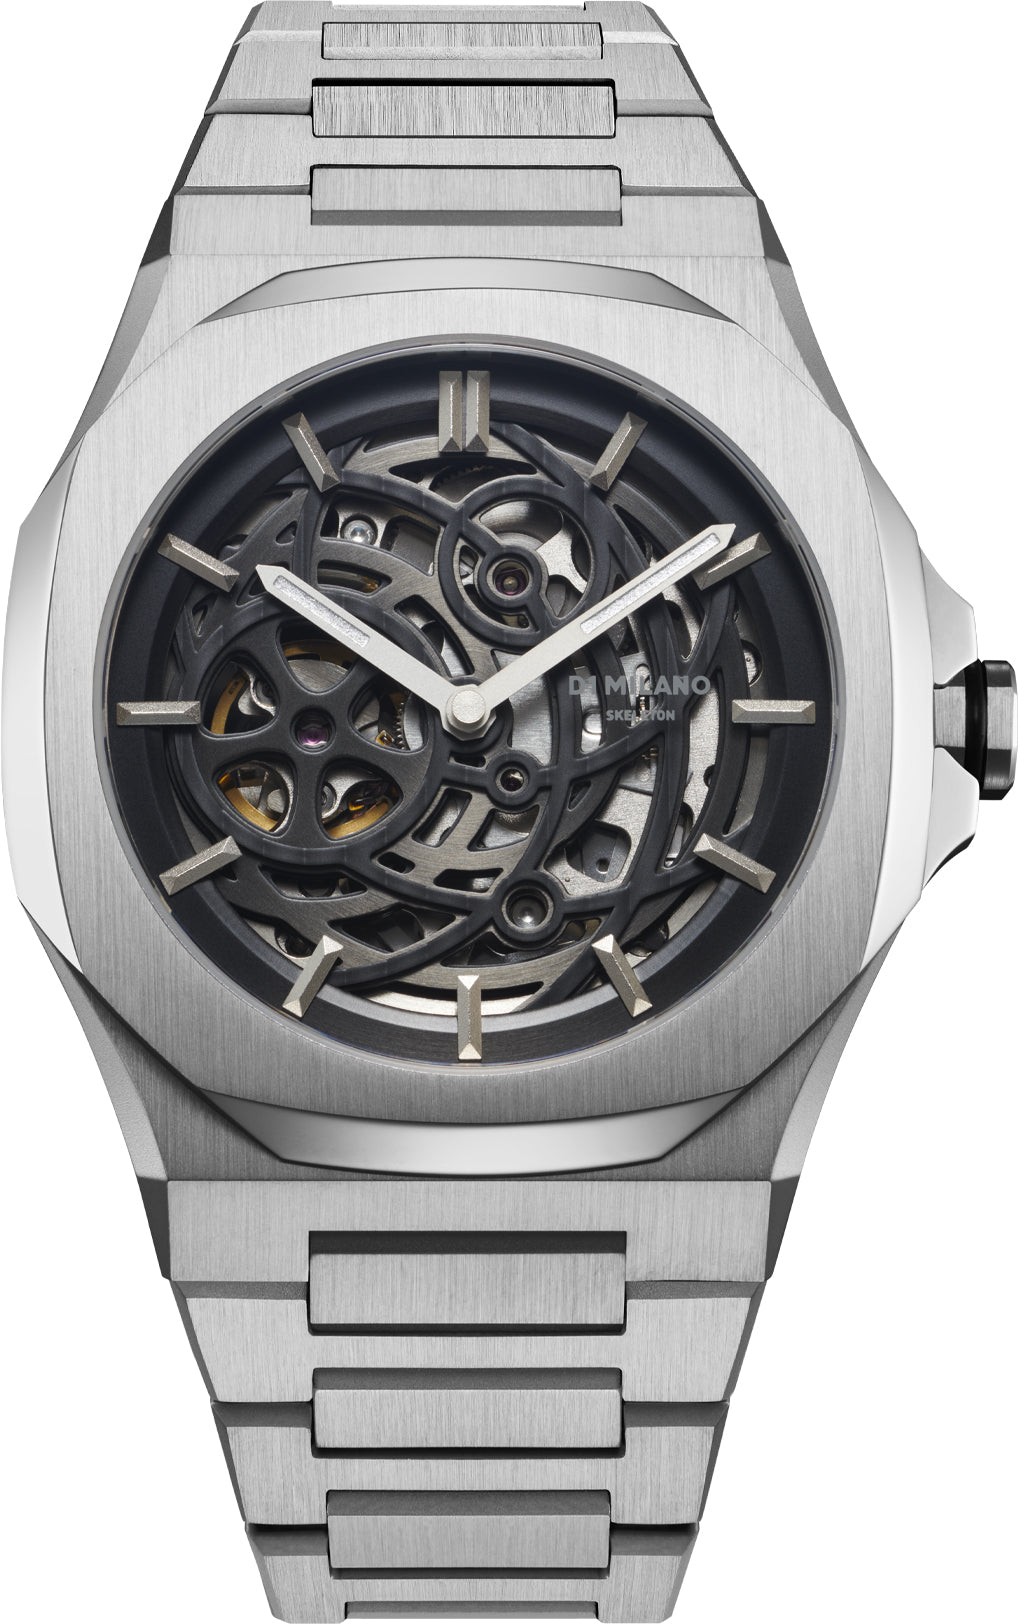 Photos - Wrist Watch Milano D1  Watch Skeleton Silver - Black DLM-093 